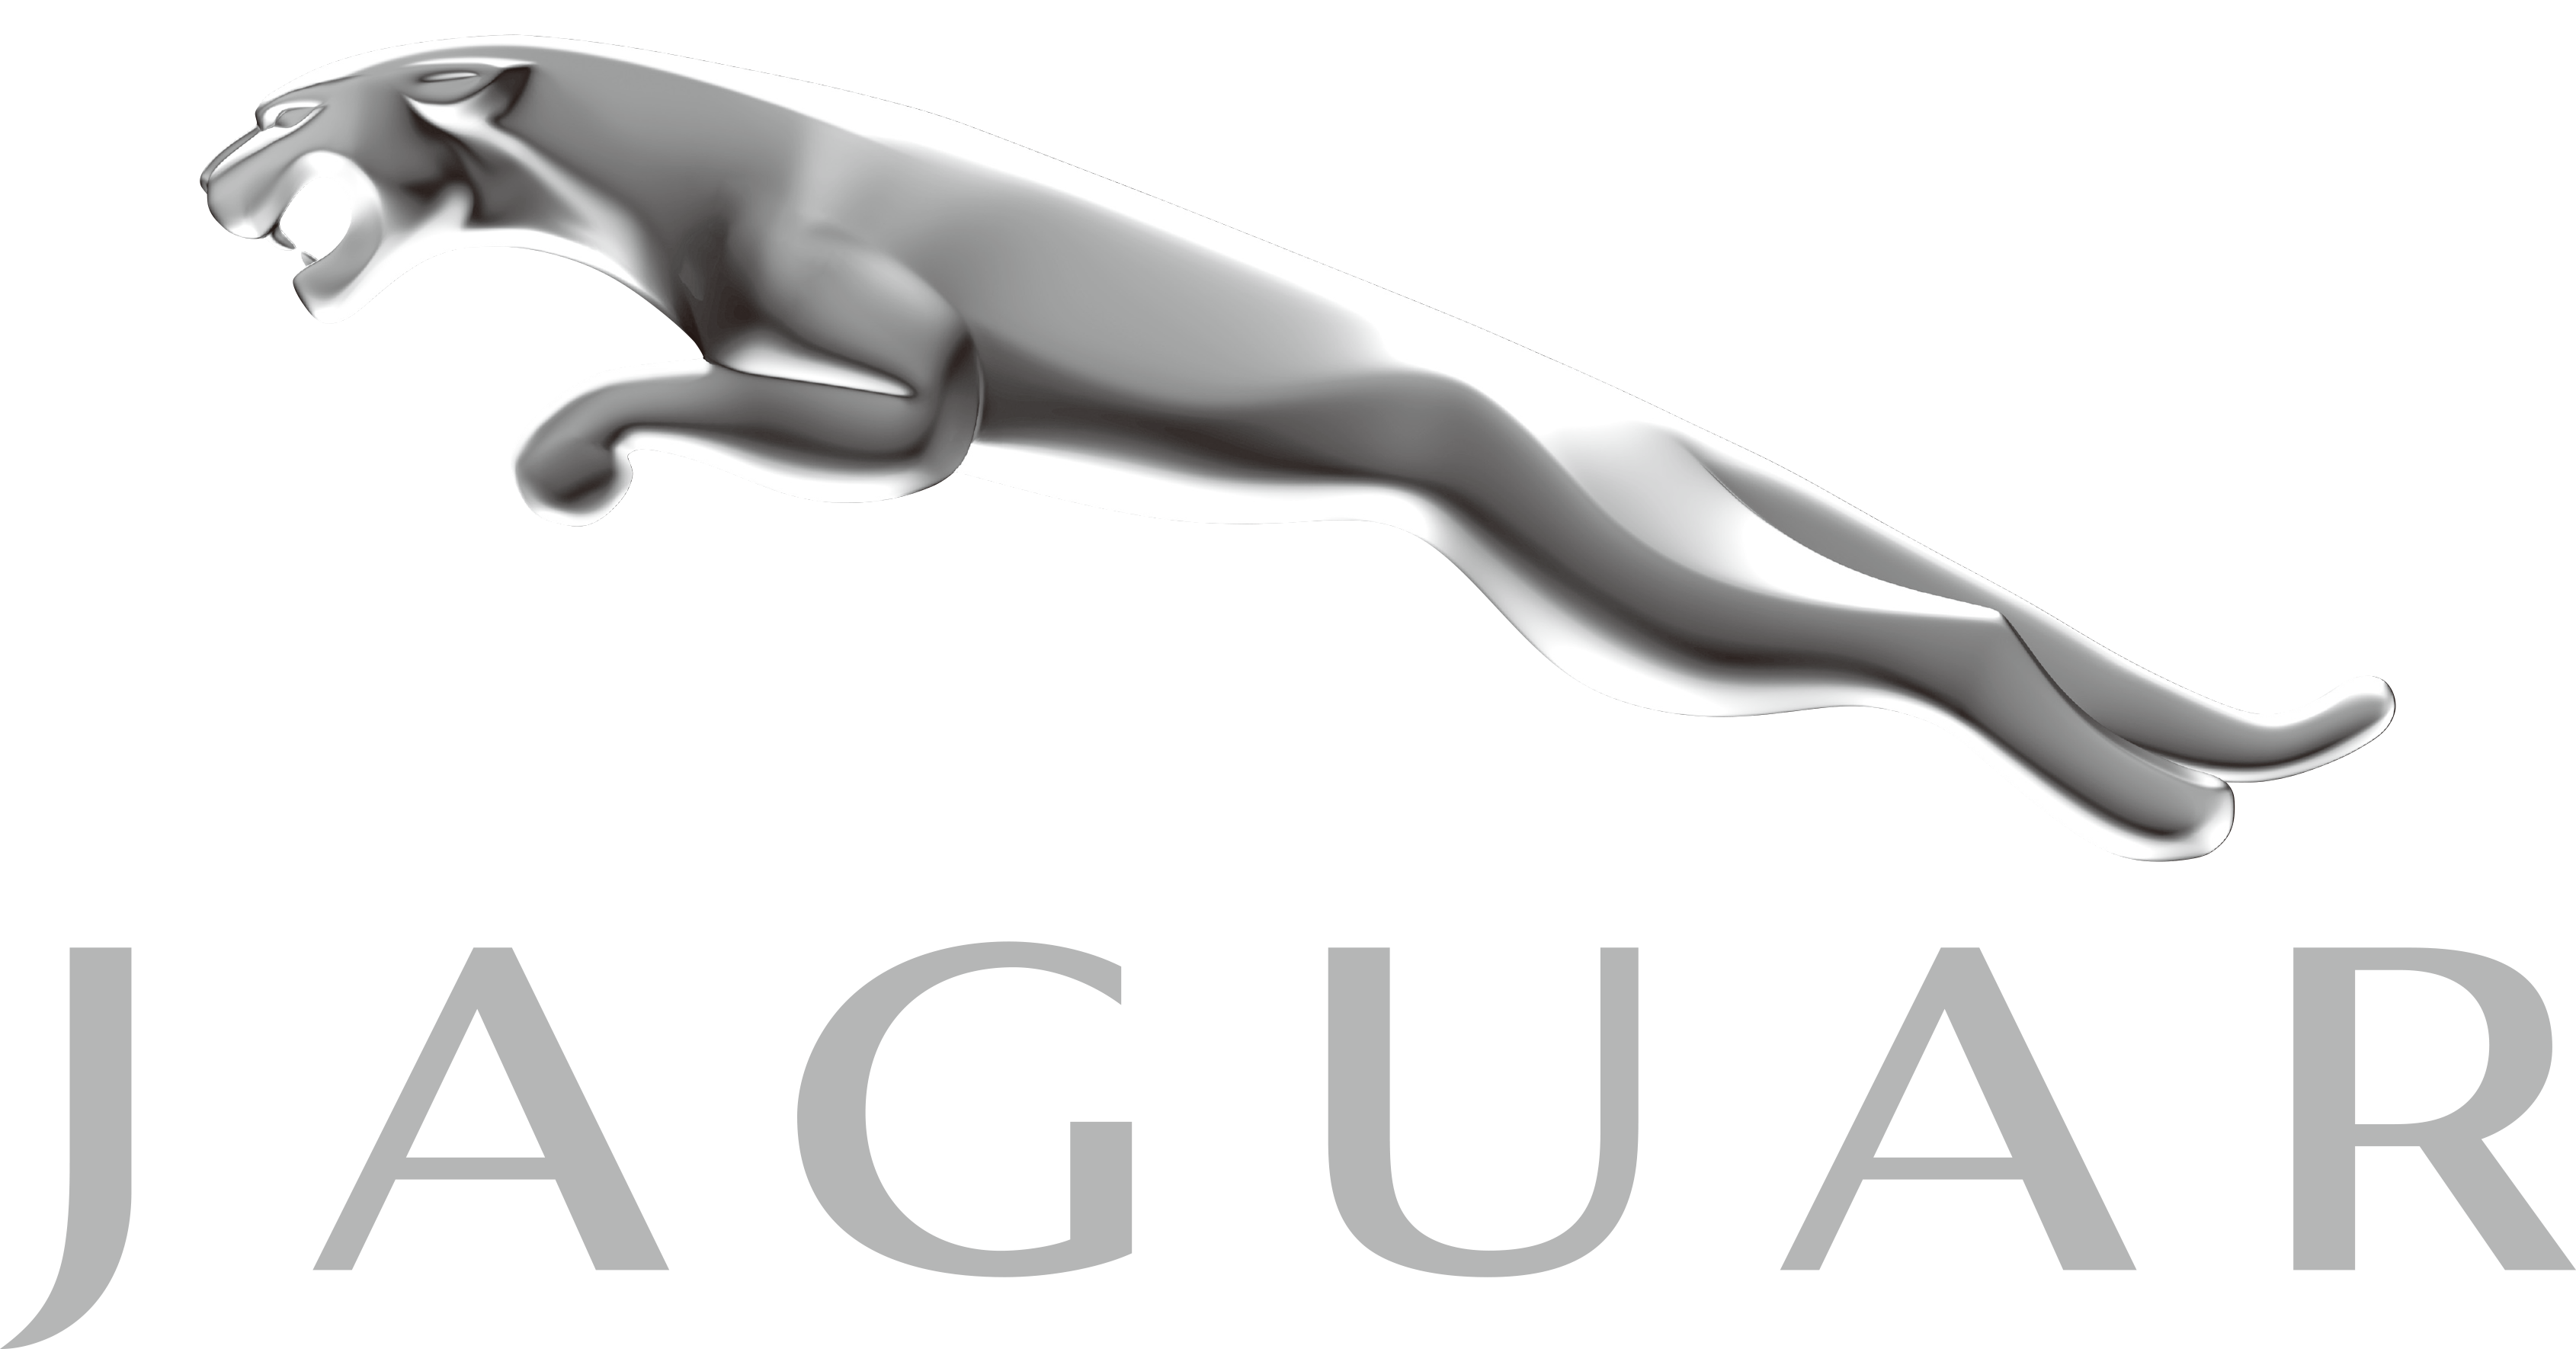 Jaguar Animated Logo